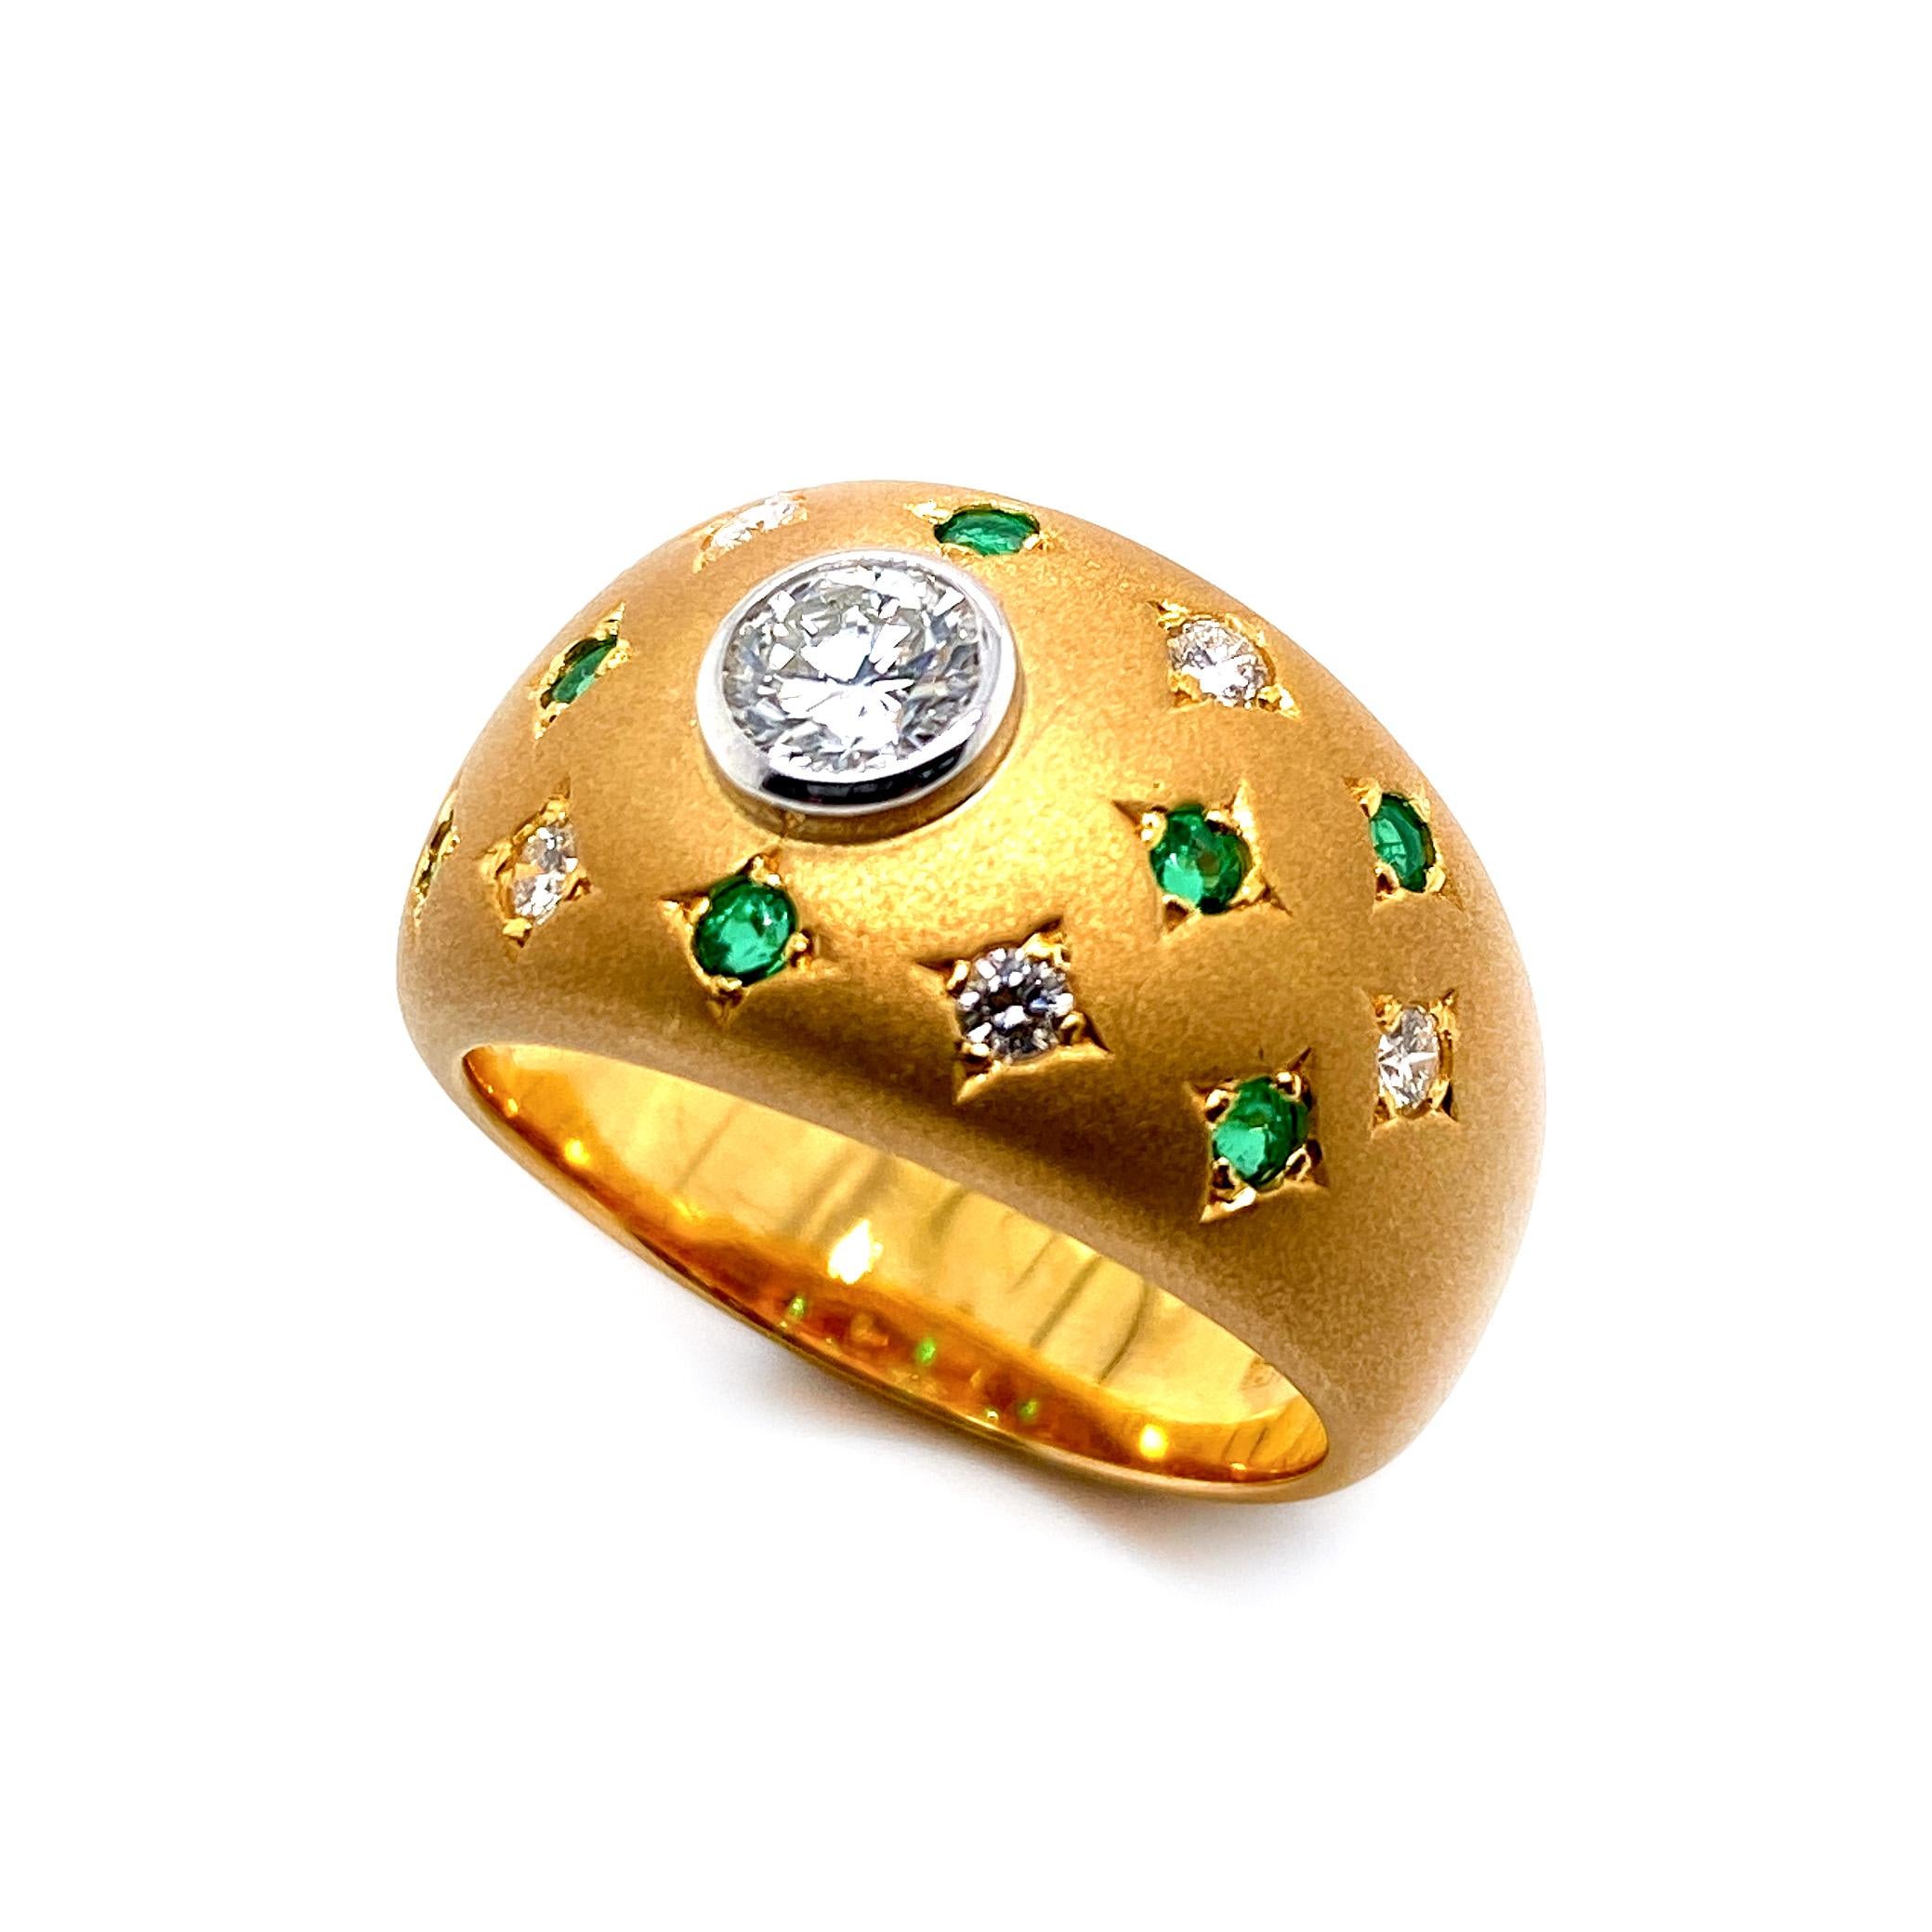 Retro Starry Diamond and Emerald Artisanal Dome Ring in 18 Karat Gold